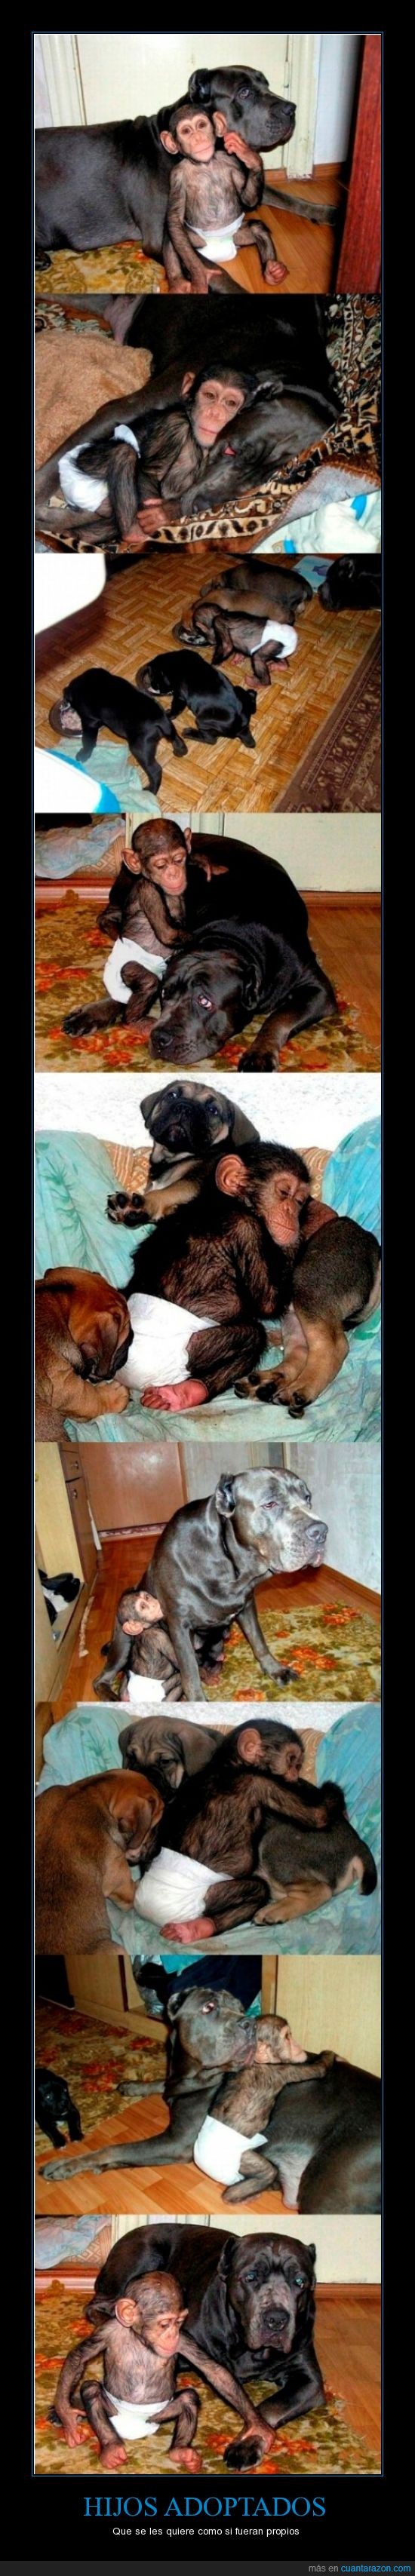 Mastín,chimpacé,huérfano,adopción,perro,mono,animal,amor